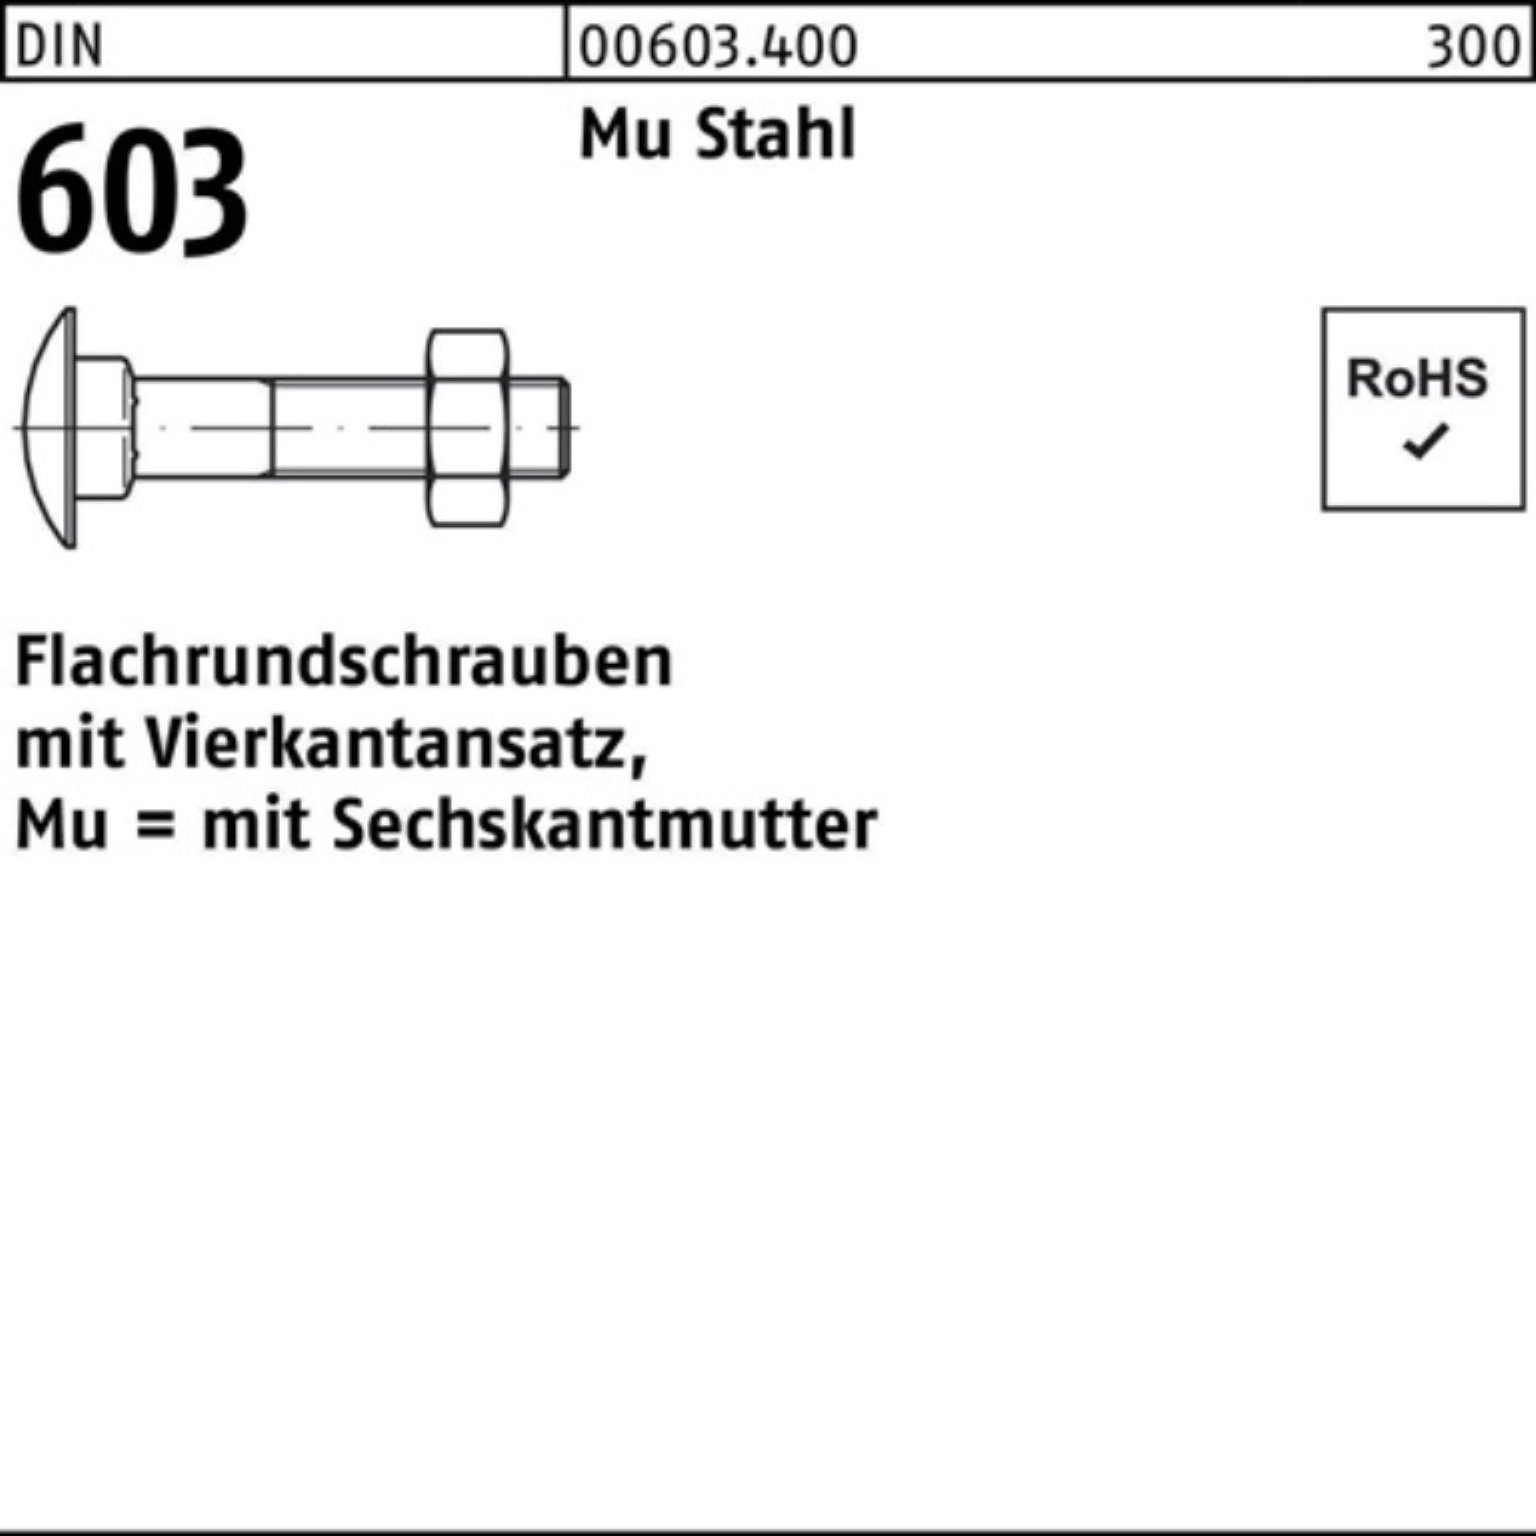 Flachrundschraube Schraube 100er M10x150 603 Reyher Vierkantansatz/6-ktmutter DIN Pack